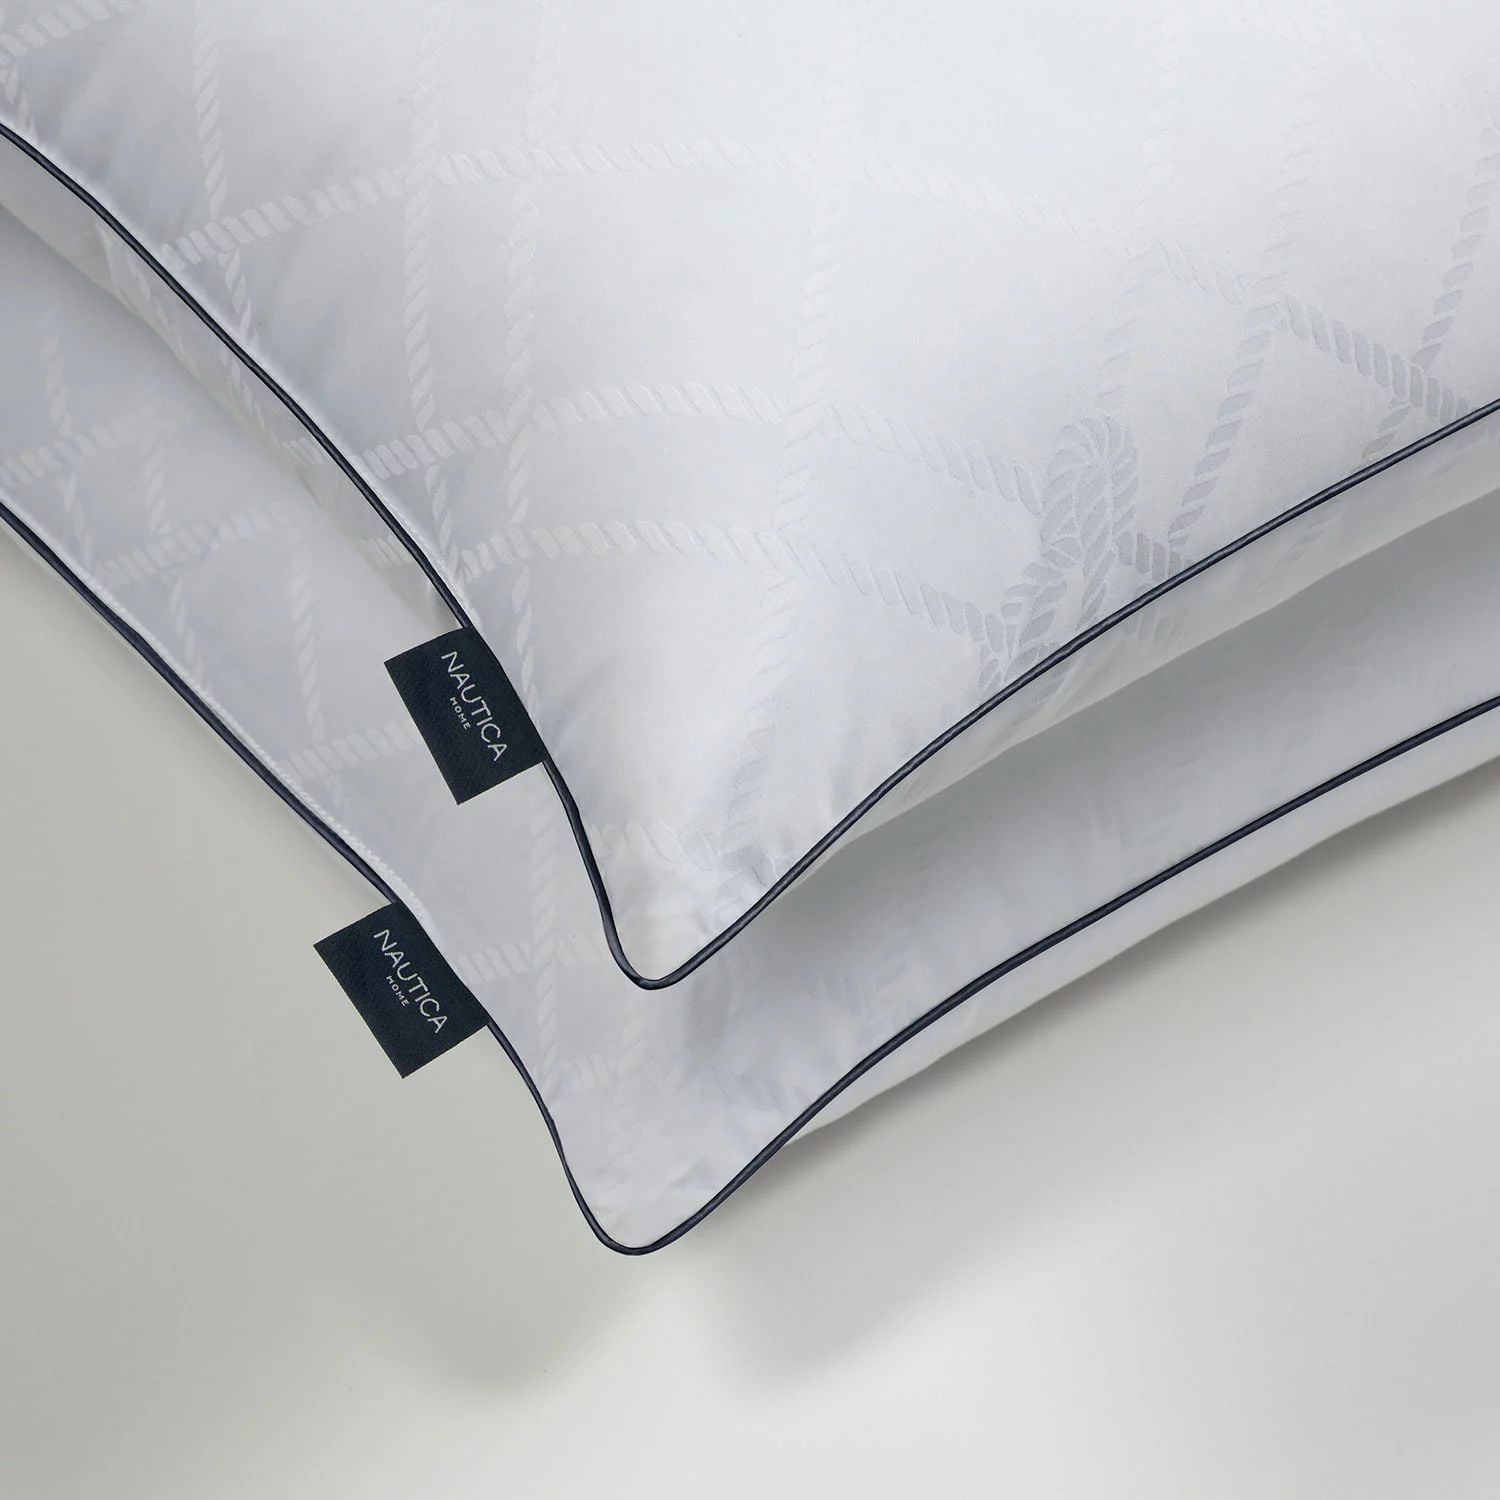 New Nautica Rigger Standard Pillow Sham Black Reversible